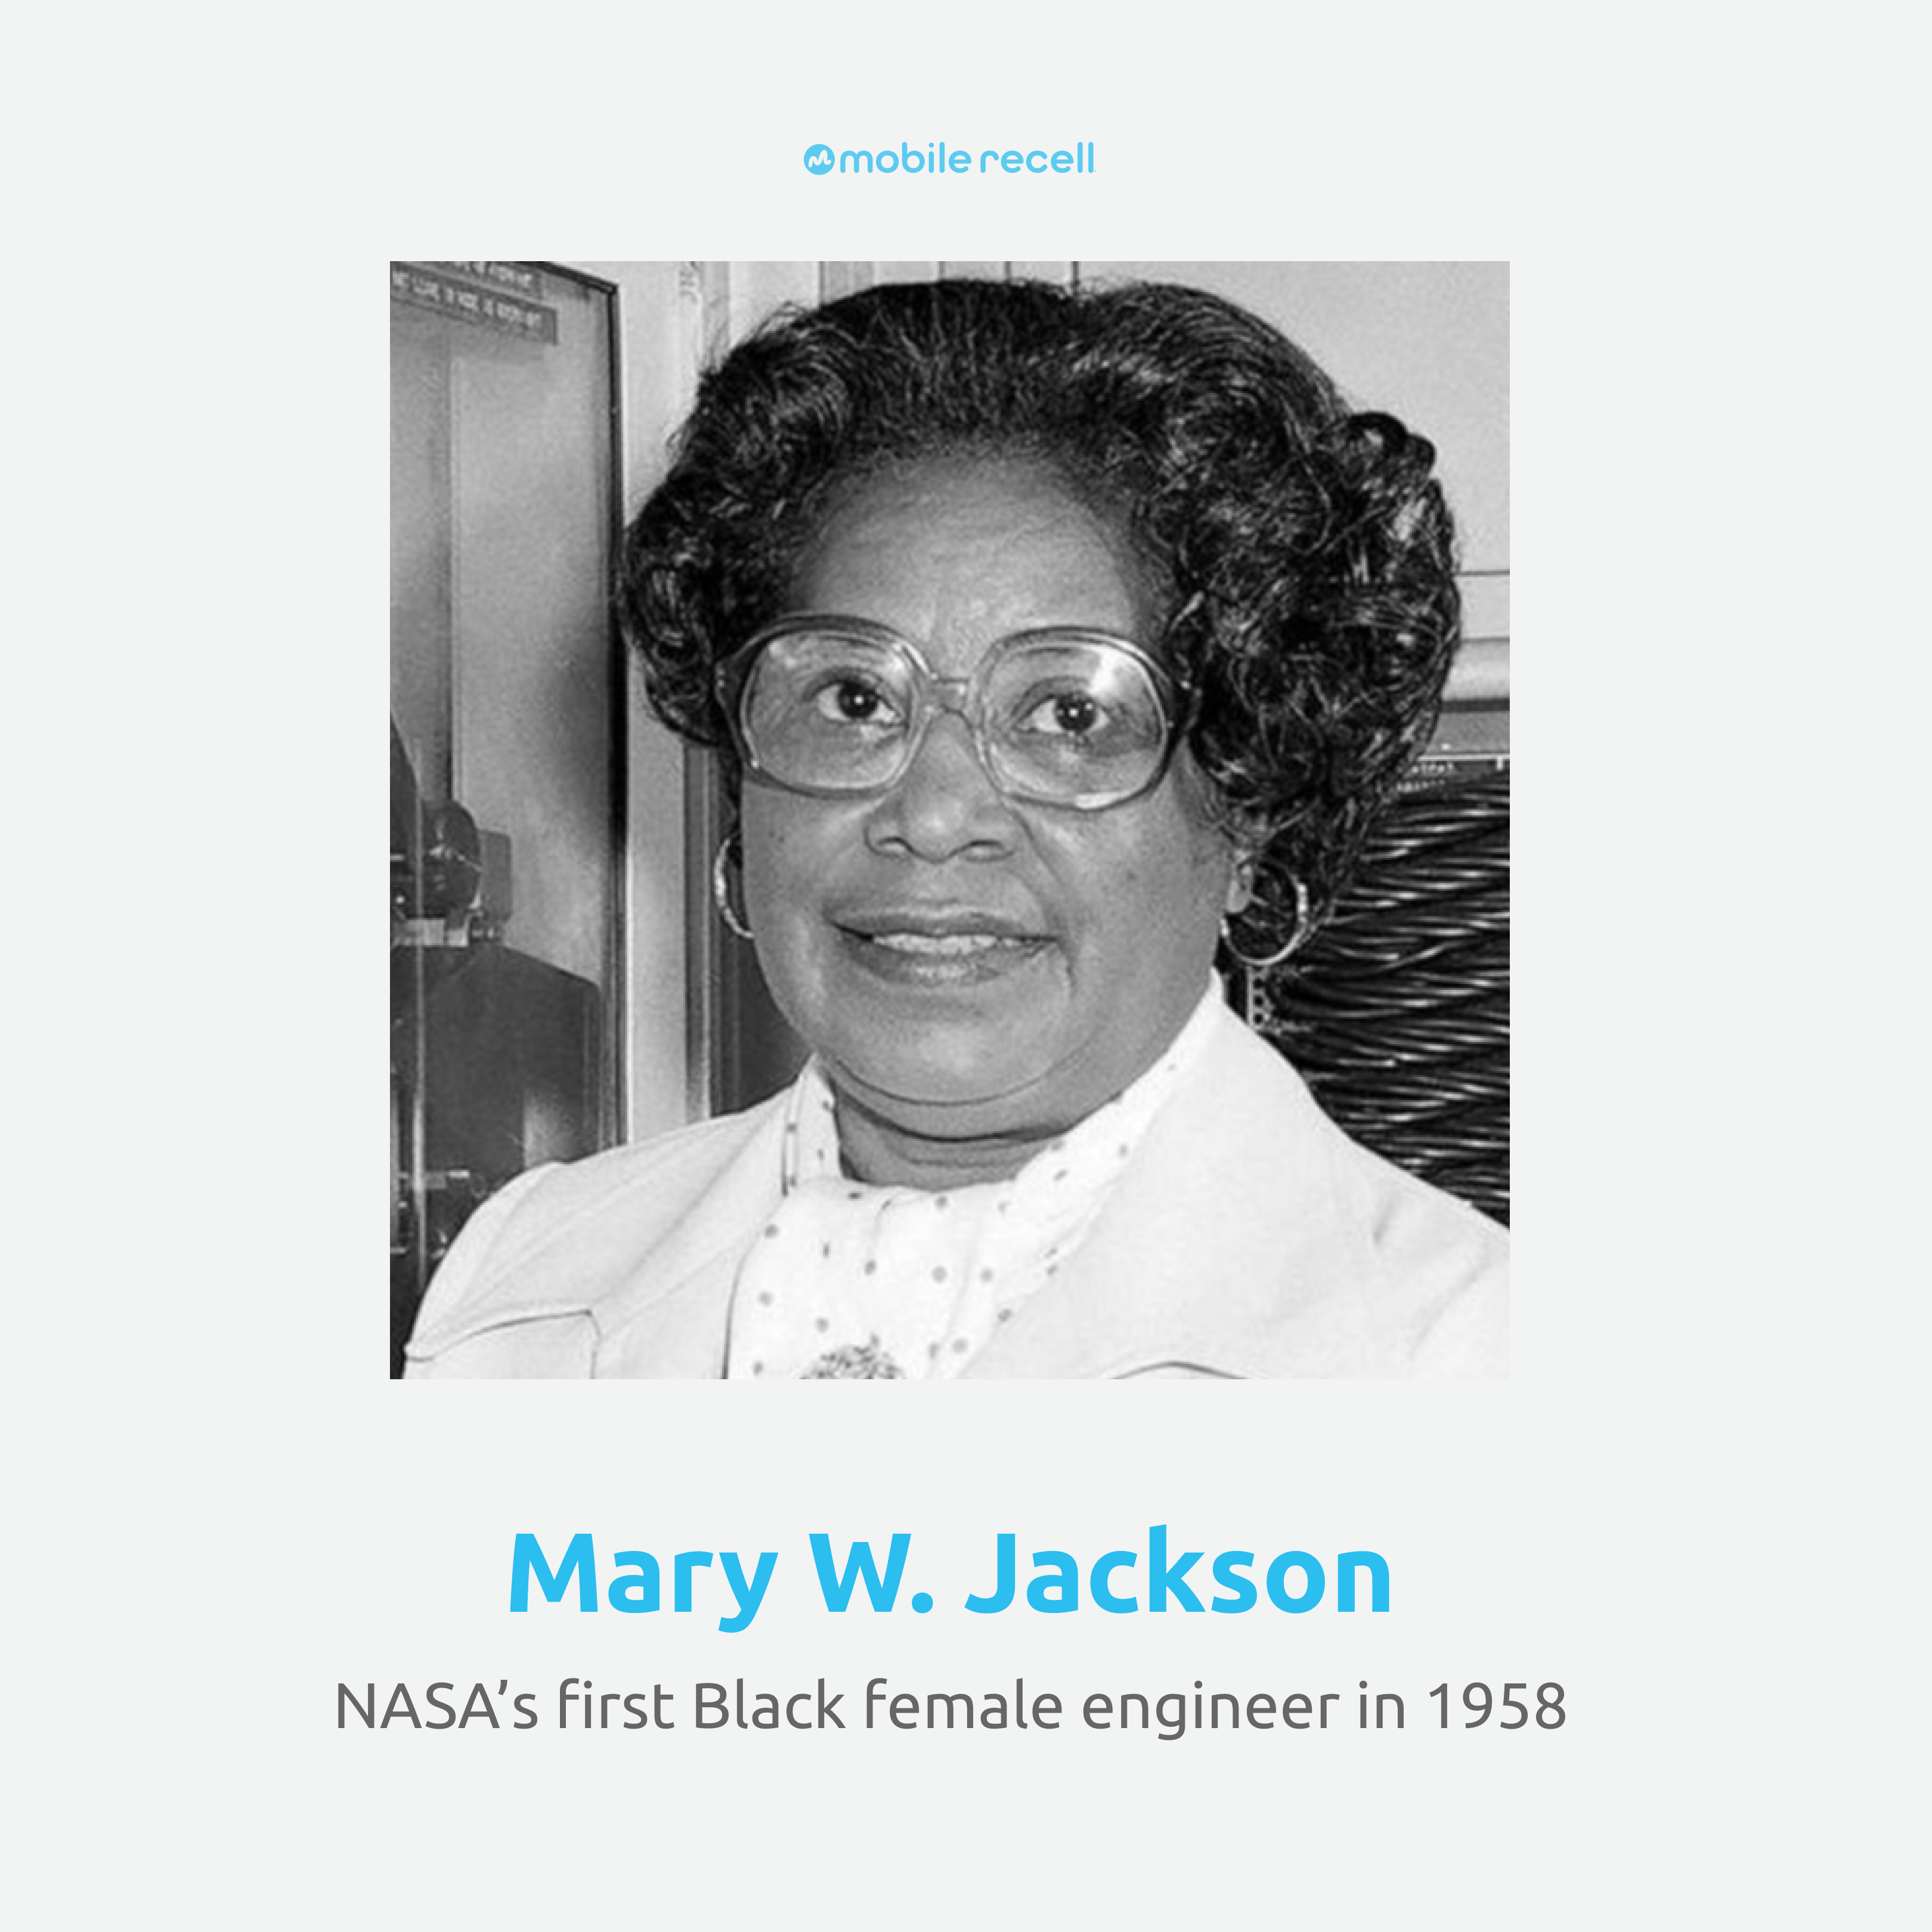 Mary W. Jackson